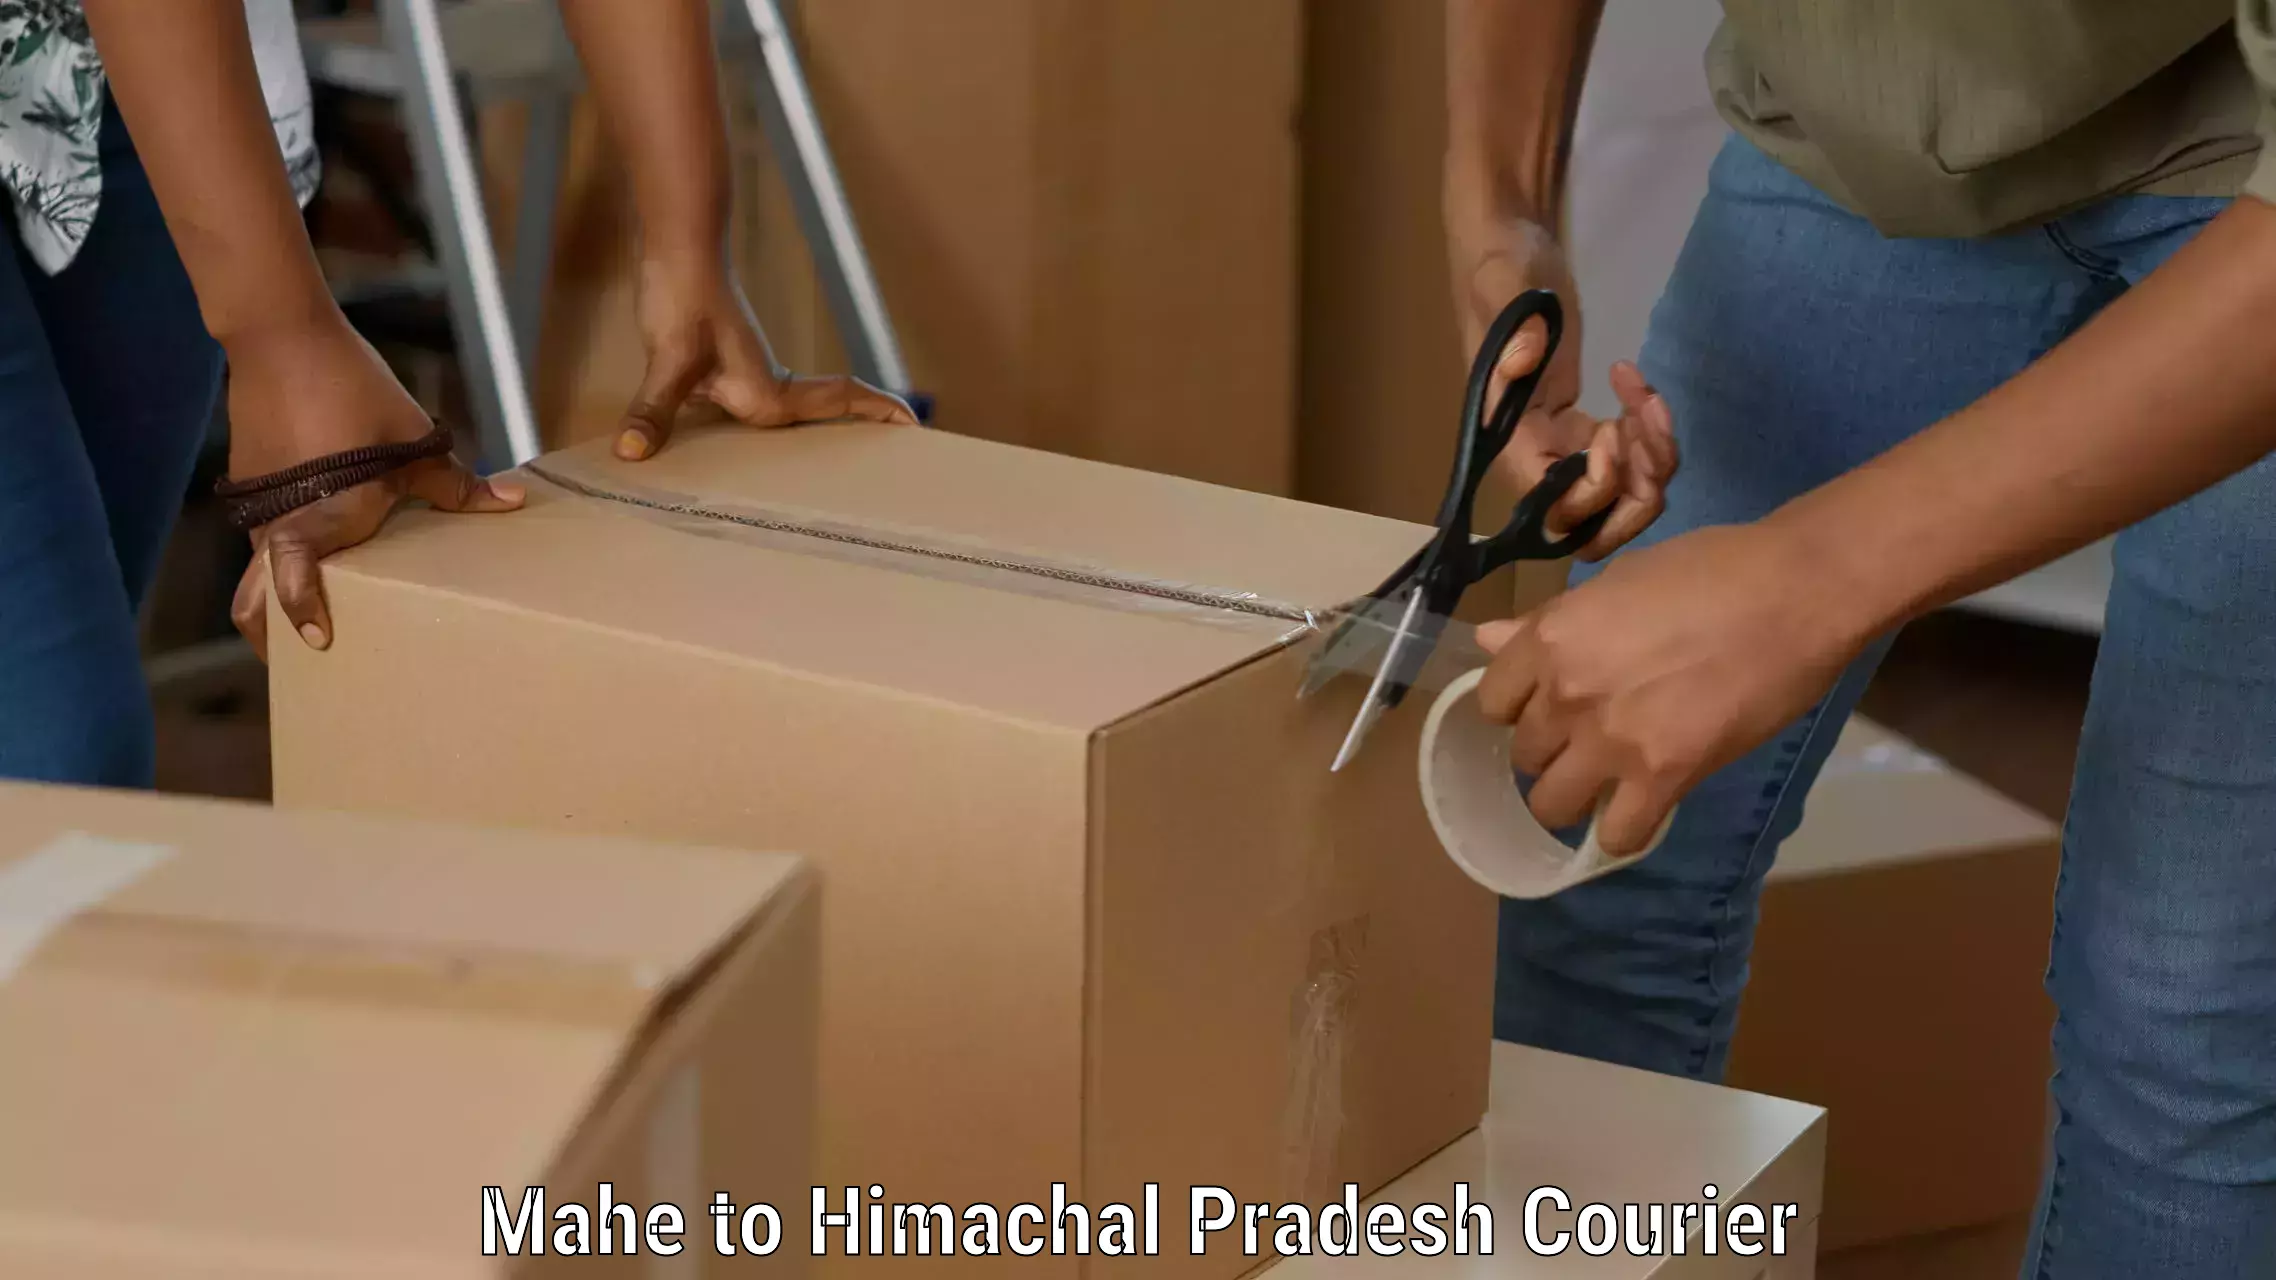 Custom courier packaging Mahe to Himachal Pradesh